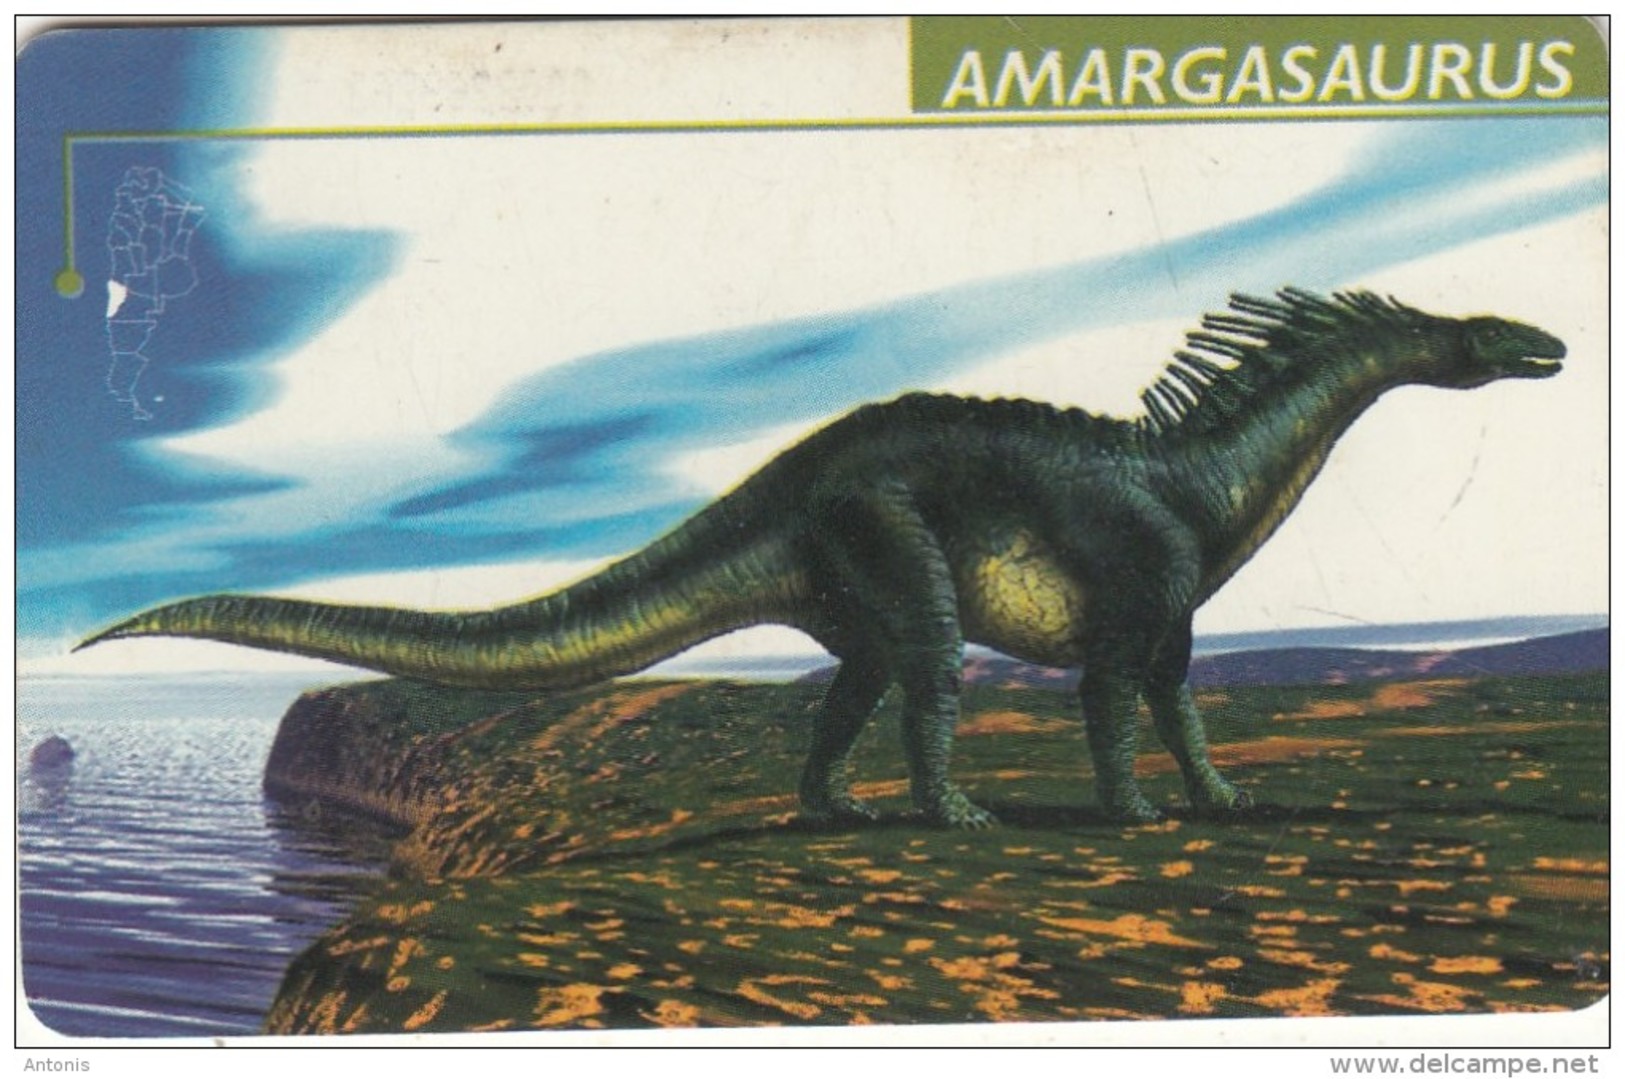 ARGENTINA(chip) - Amargasaurus, Telefonica Telecard(F 78), 07/97, Used - Argentina